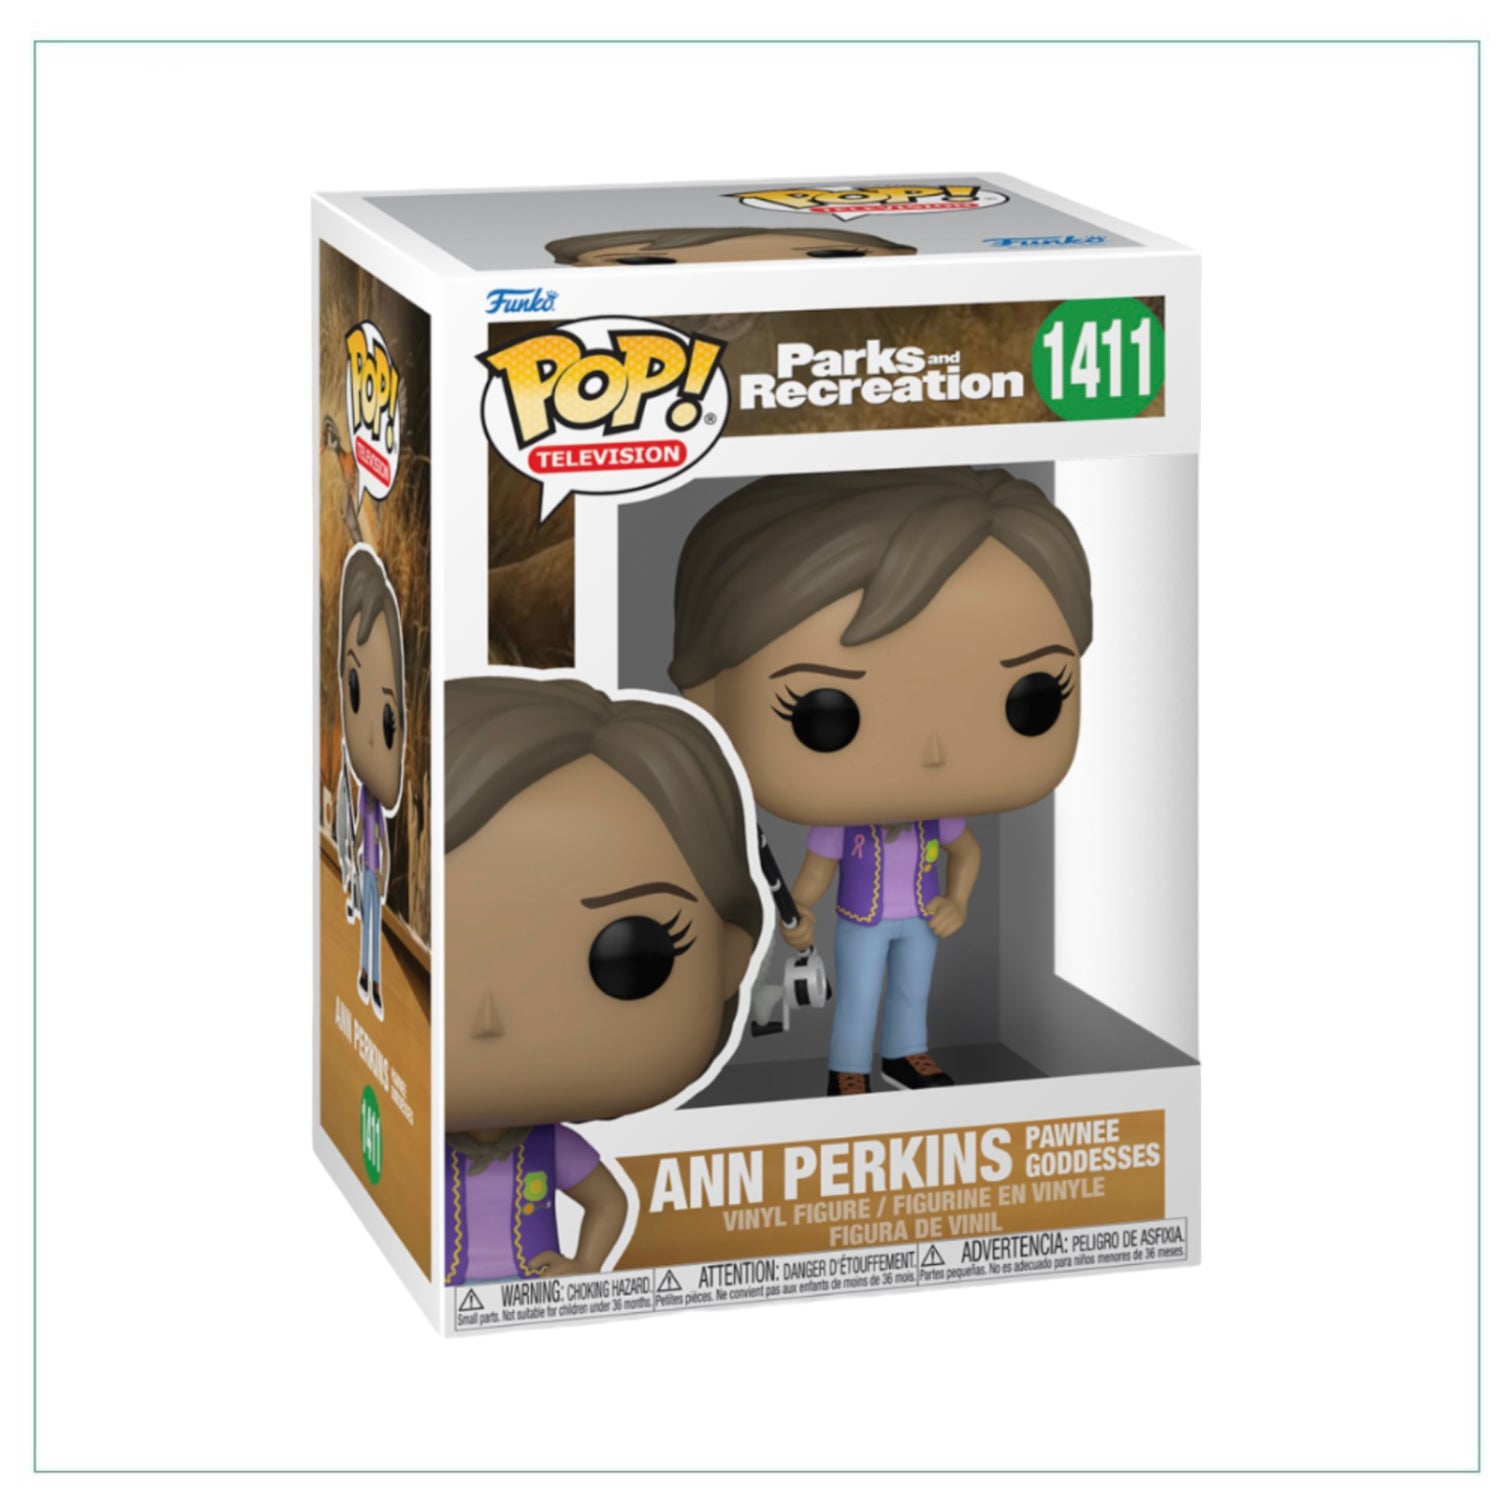 Ann Perkins (Pawnee Goodesses) #1411 Funko Pop! - Parks & Recreation